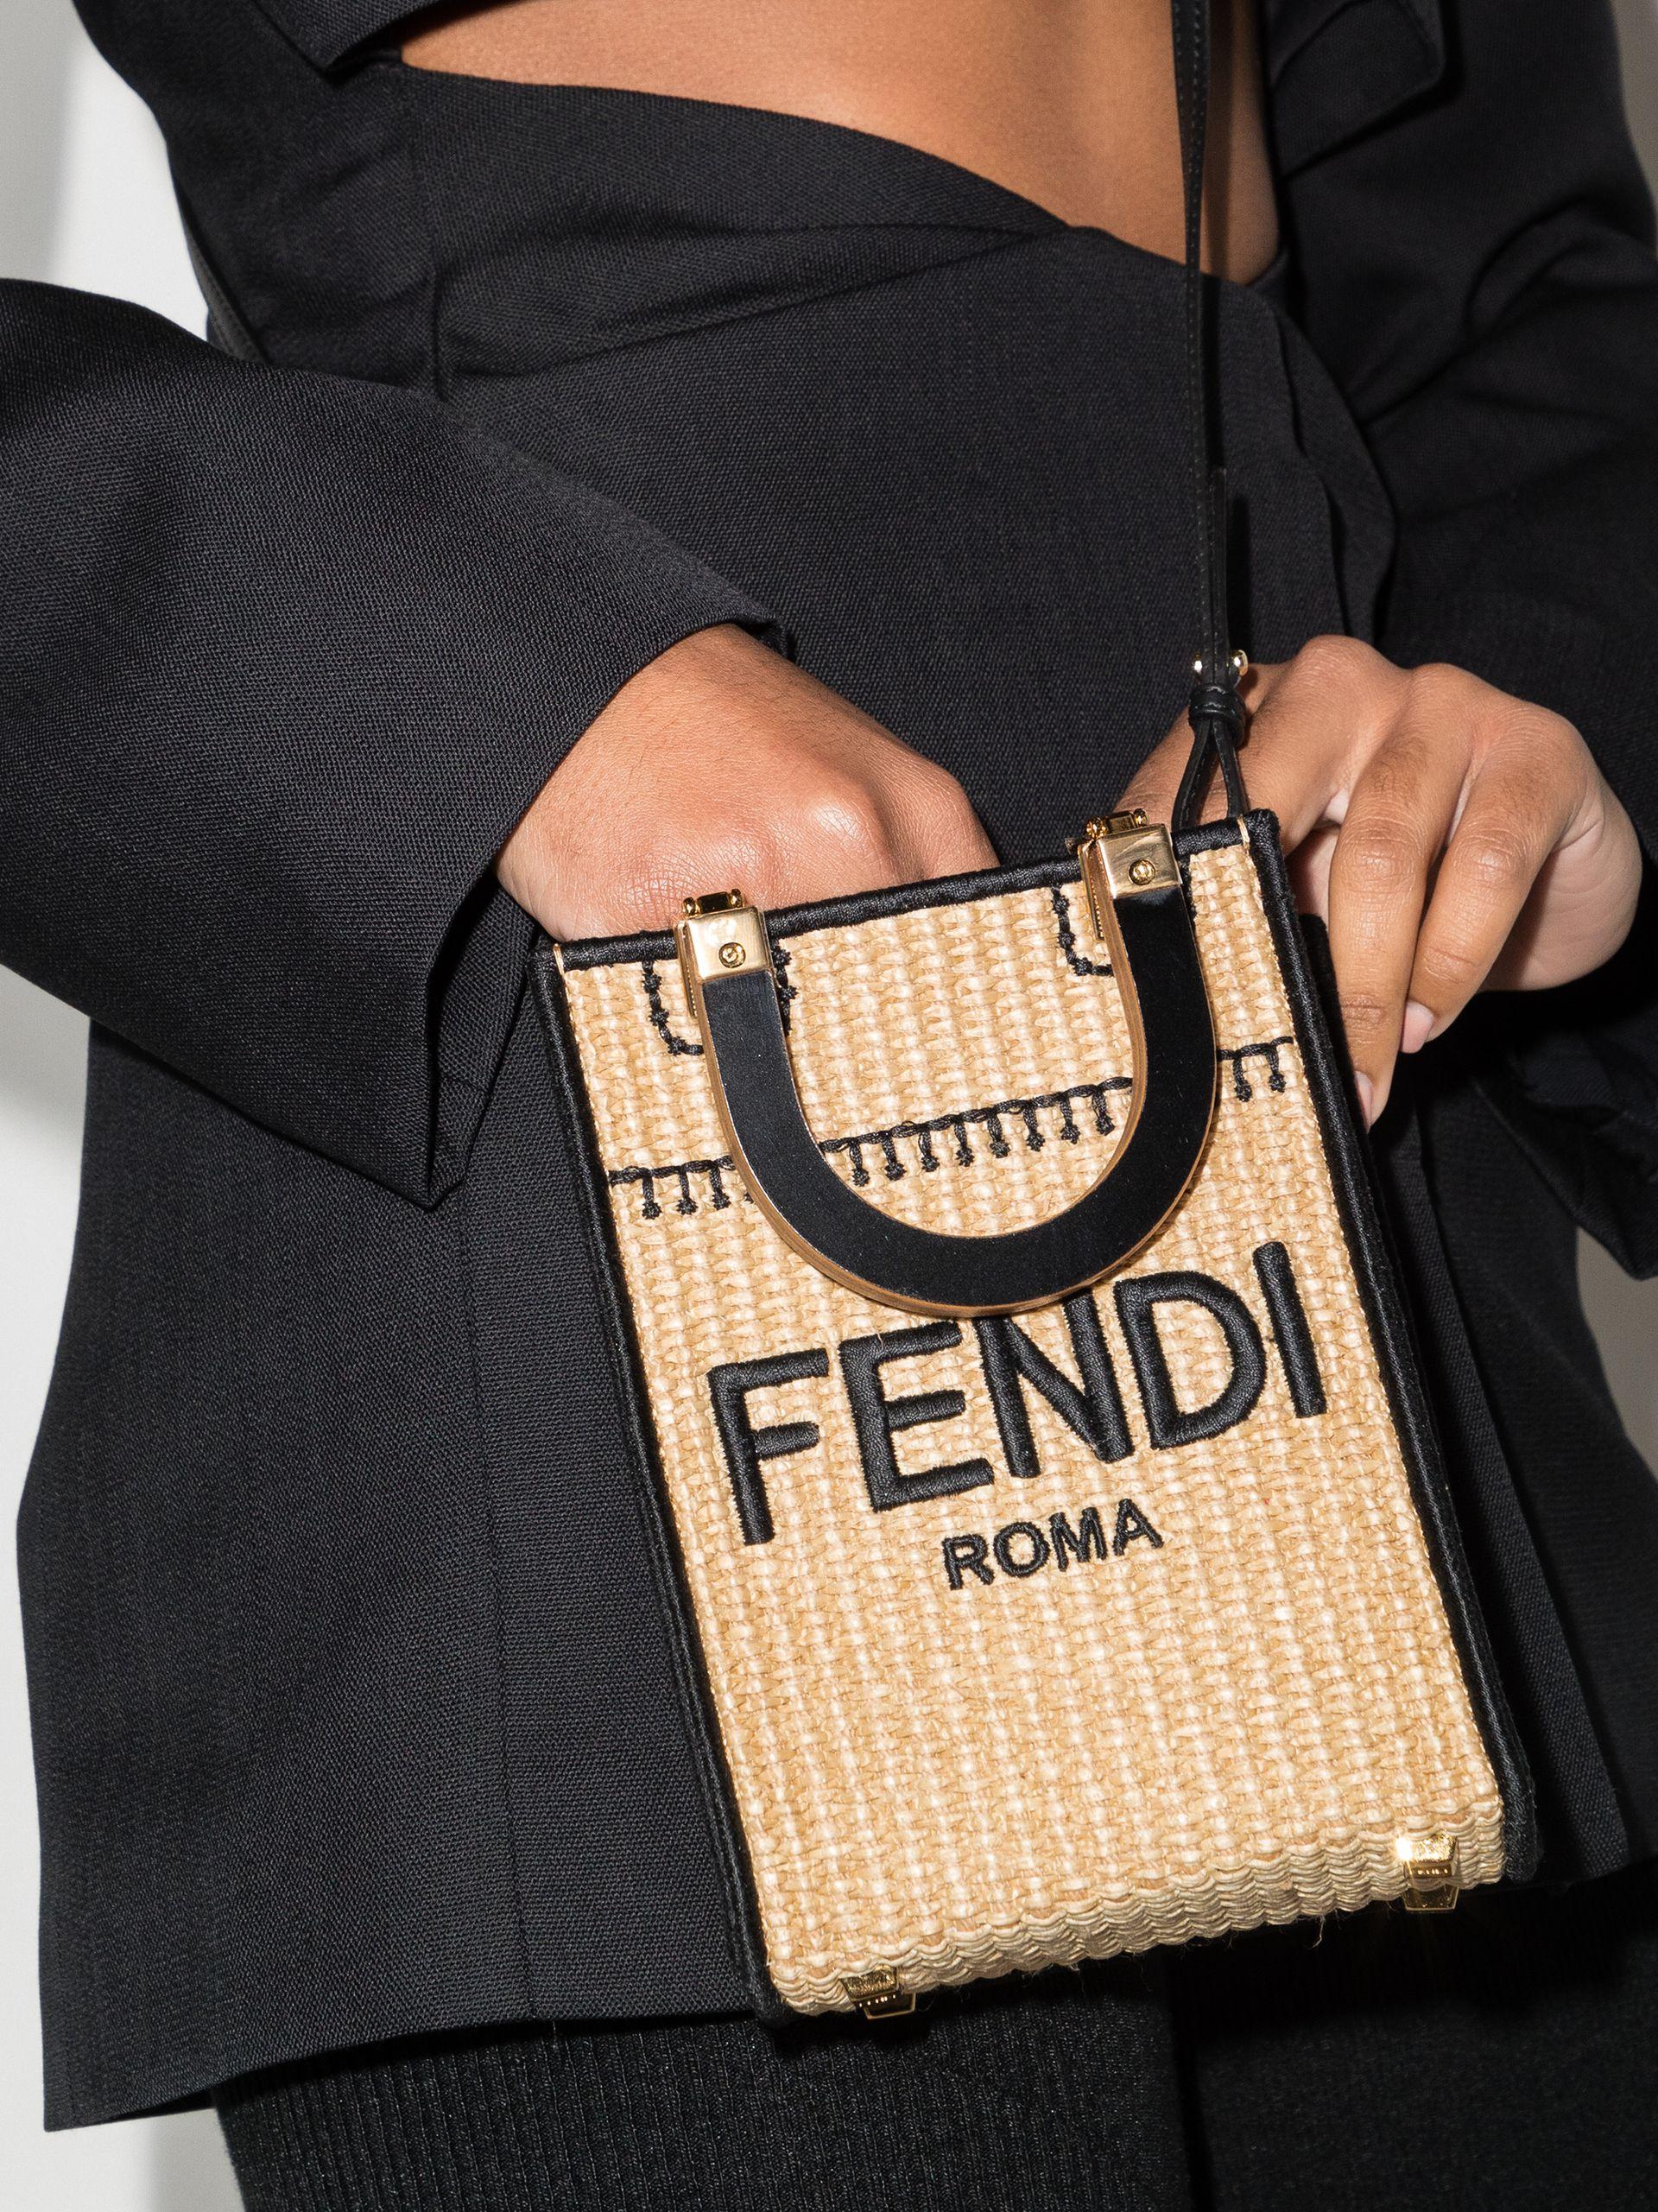 Fendi Sunshine Shopper Tote Bag in Lavender